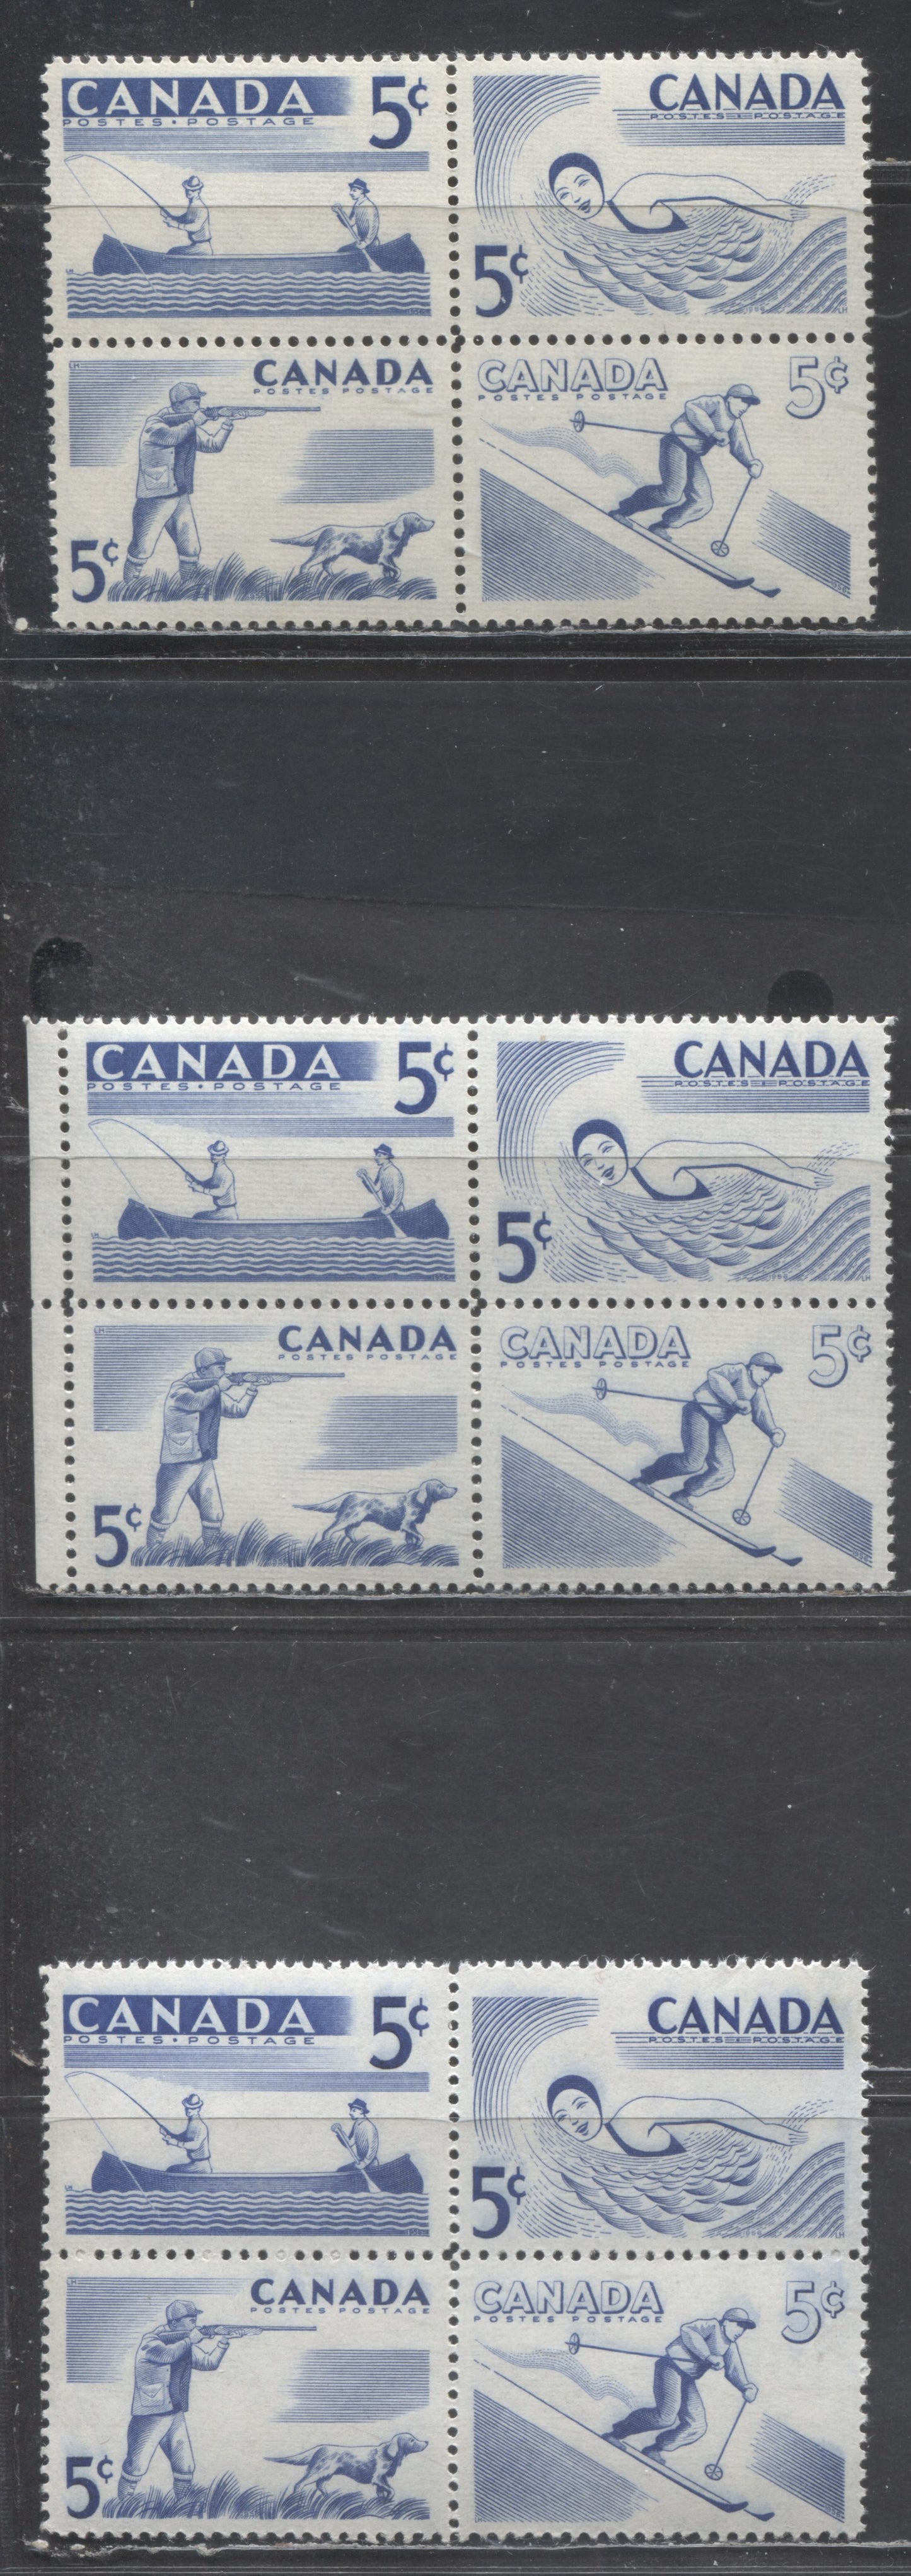 Canada #368a 5c Deep Ultramarine Skiing, Canoeing, Swimming & Hunting, 1957 Recreational Sports Issue, 3 VFNH Se-Tenant Blocks of 4, Horizontally Ribbed, LF, DF & NF Papers, Streaky Cream Semi-Gloss Gum